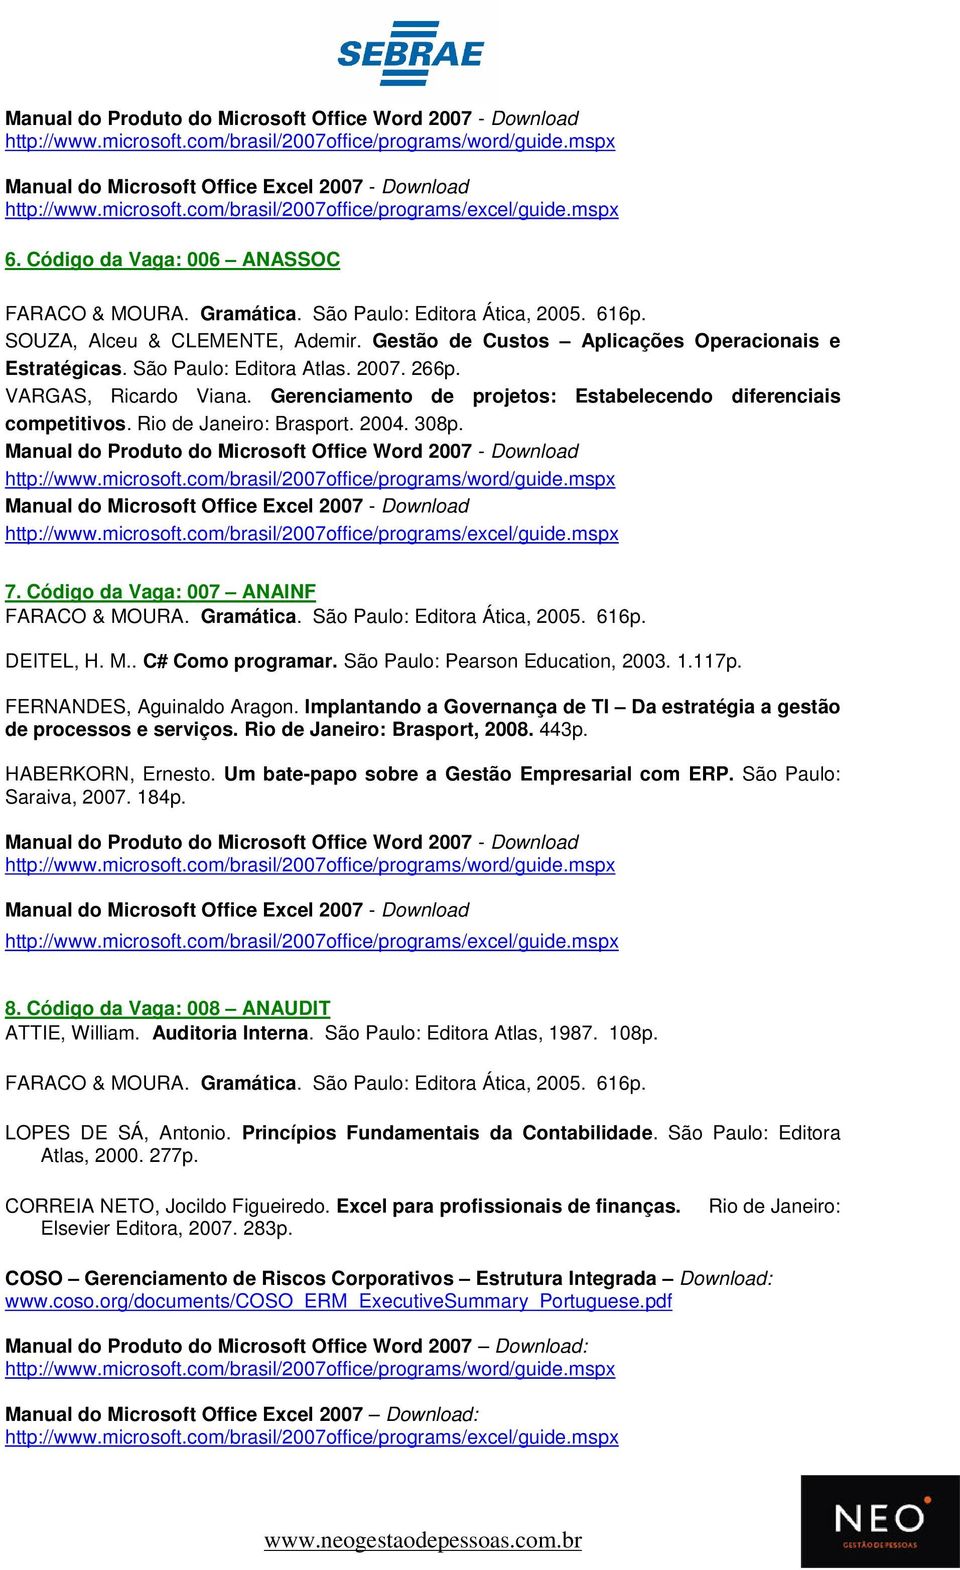 Rio de Janeiro: Brasport. 2004. 308p. Manual do Produto do Microsoft Office Word 2007 - Download Manual do Microsoft Office Excel 2007 - Download 7. Código da Vaga: 007 ANAINF DEITEL, H. M.. C# Como programar.